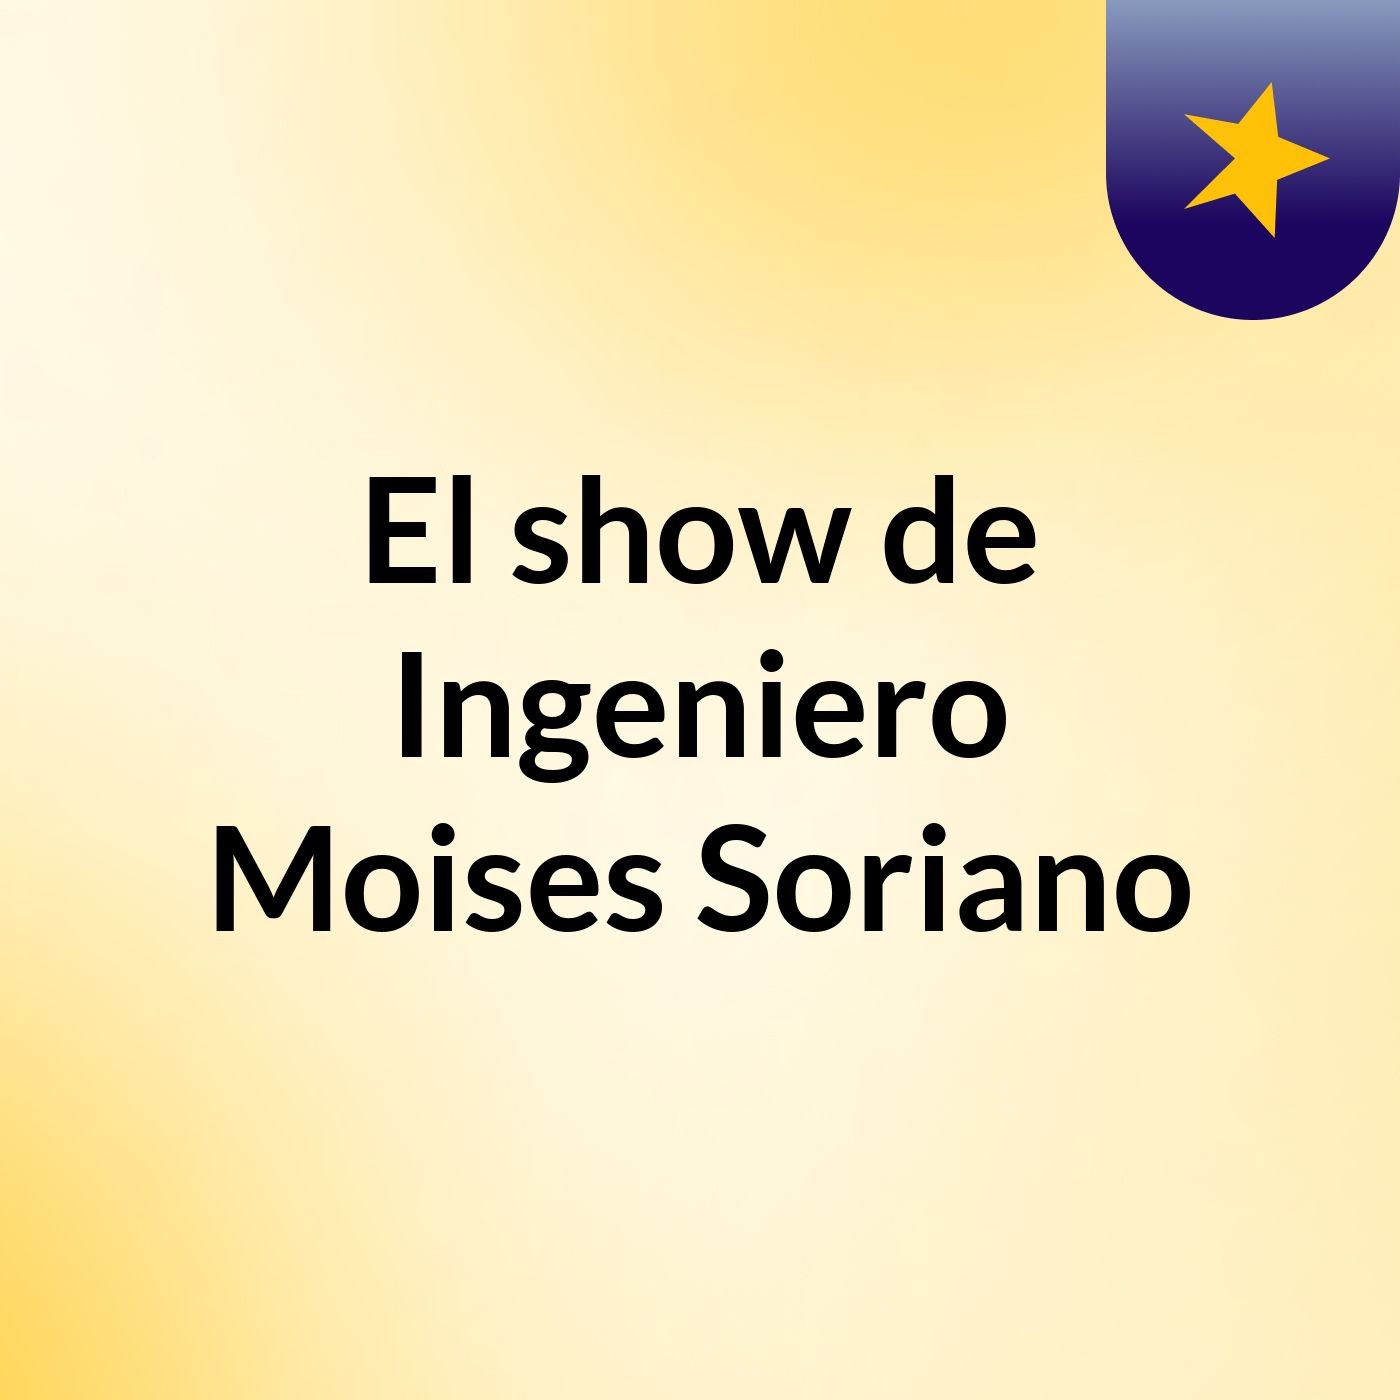 El show de Ingeniero Moises Soriano